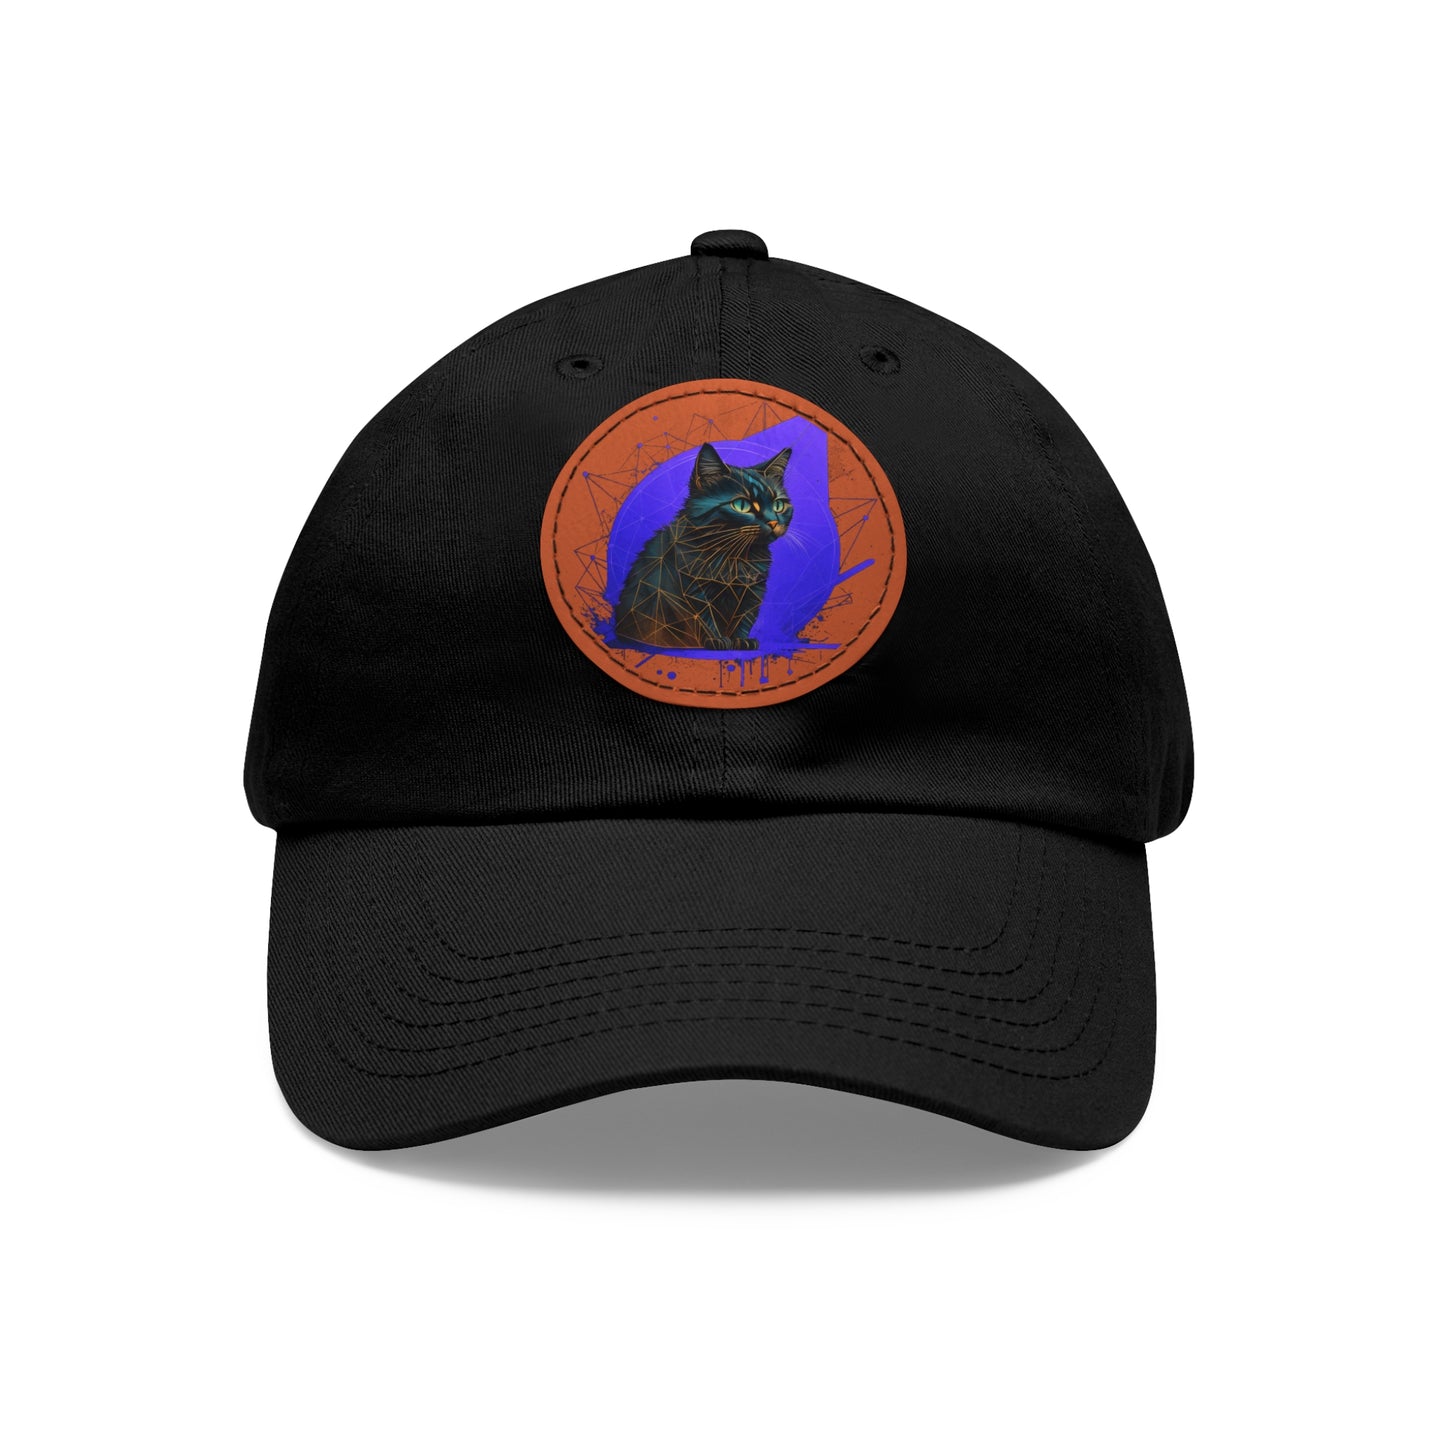 baseball hat with apache cat logo